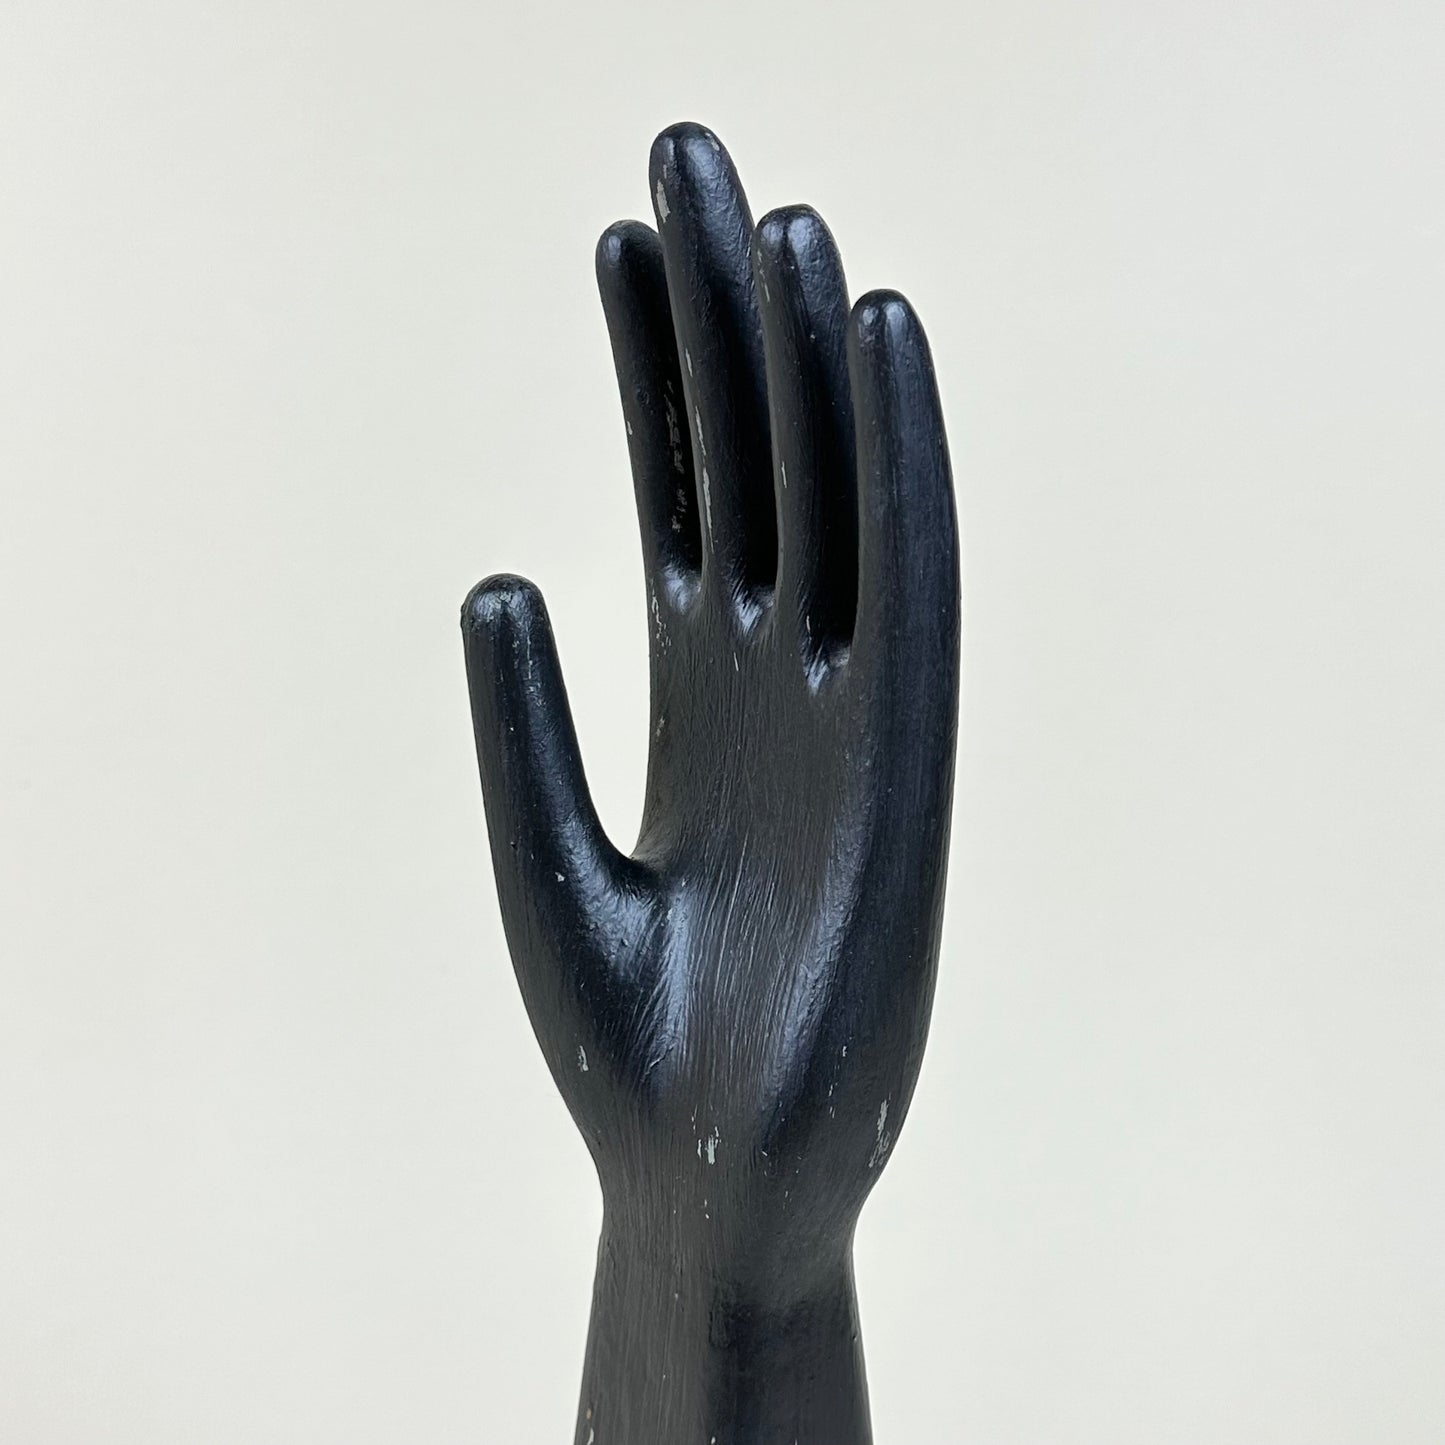 Black, wooden hand sculpture, vintage